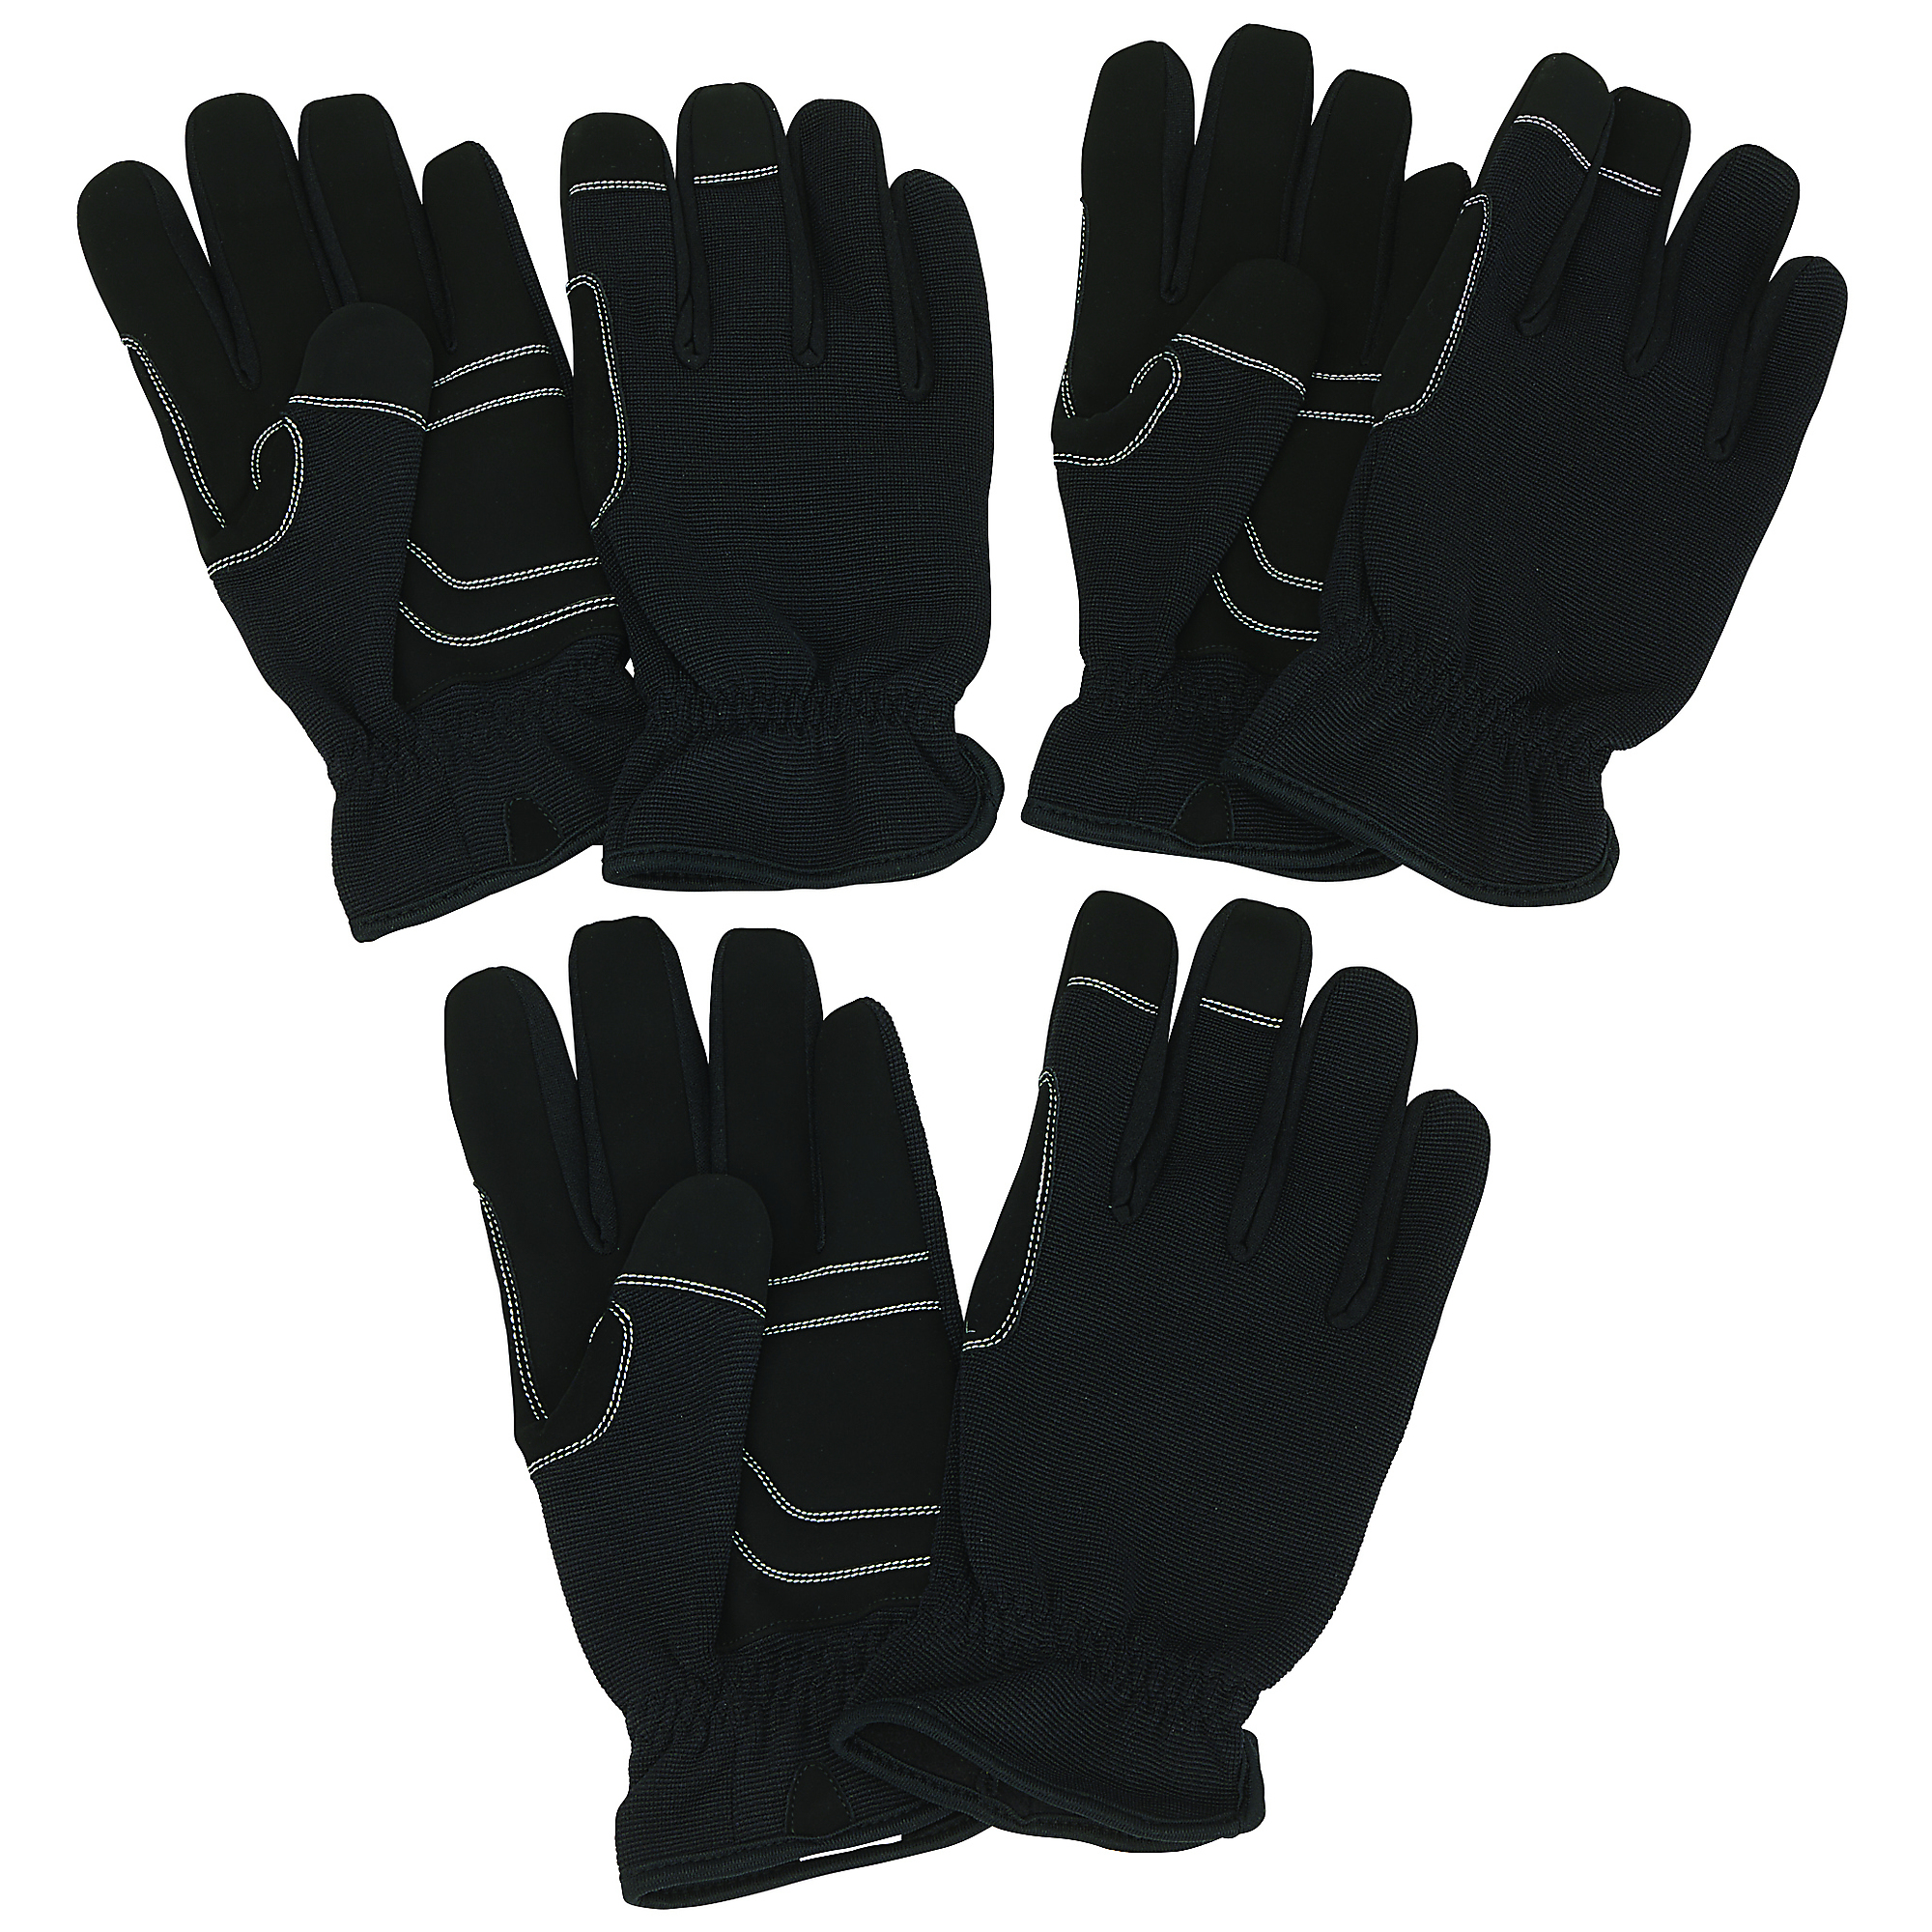 Ironton Men's High-Dexterity Utility Gloves, 3 Pairs, Black, Large